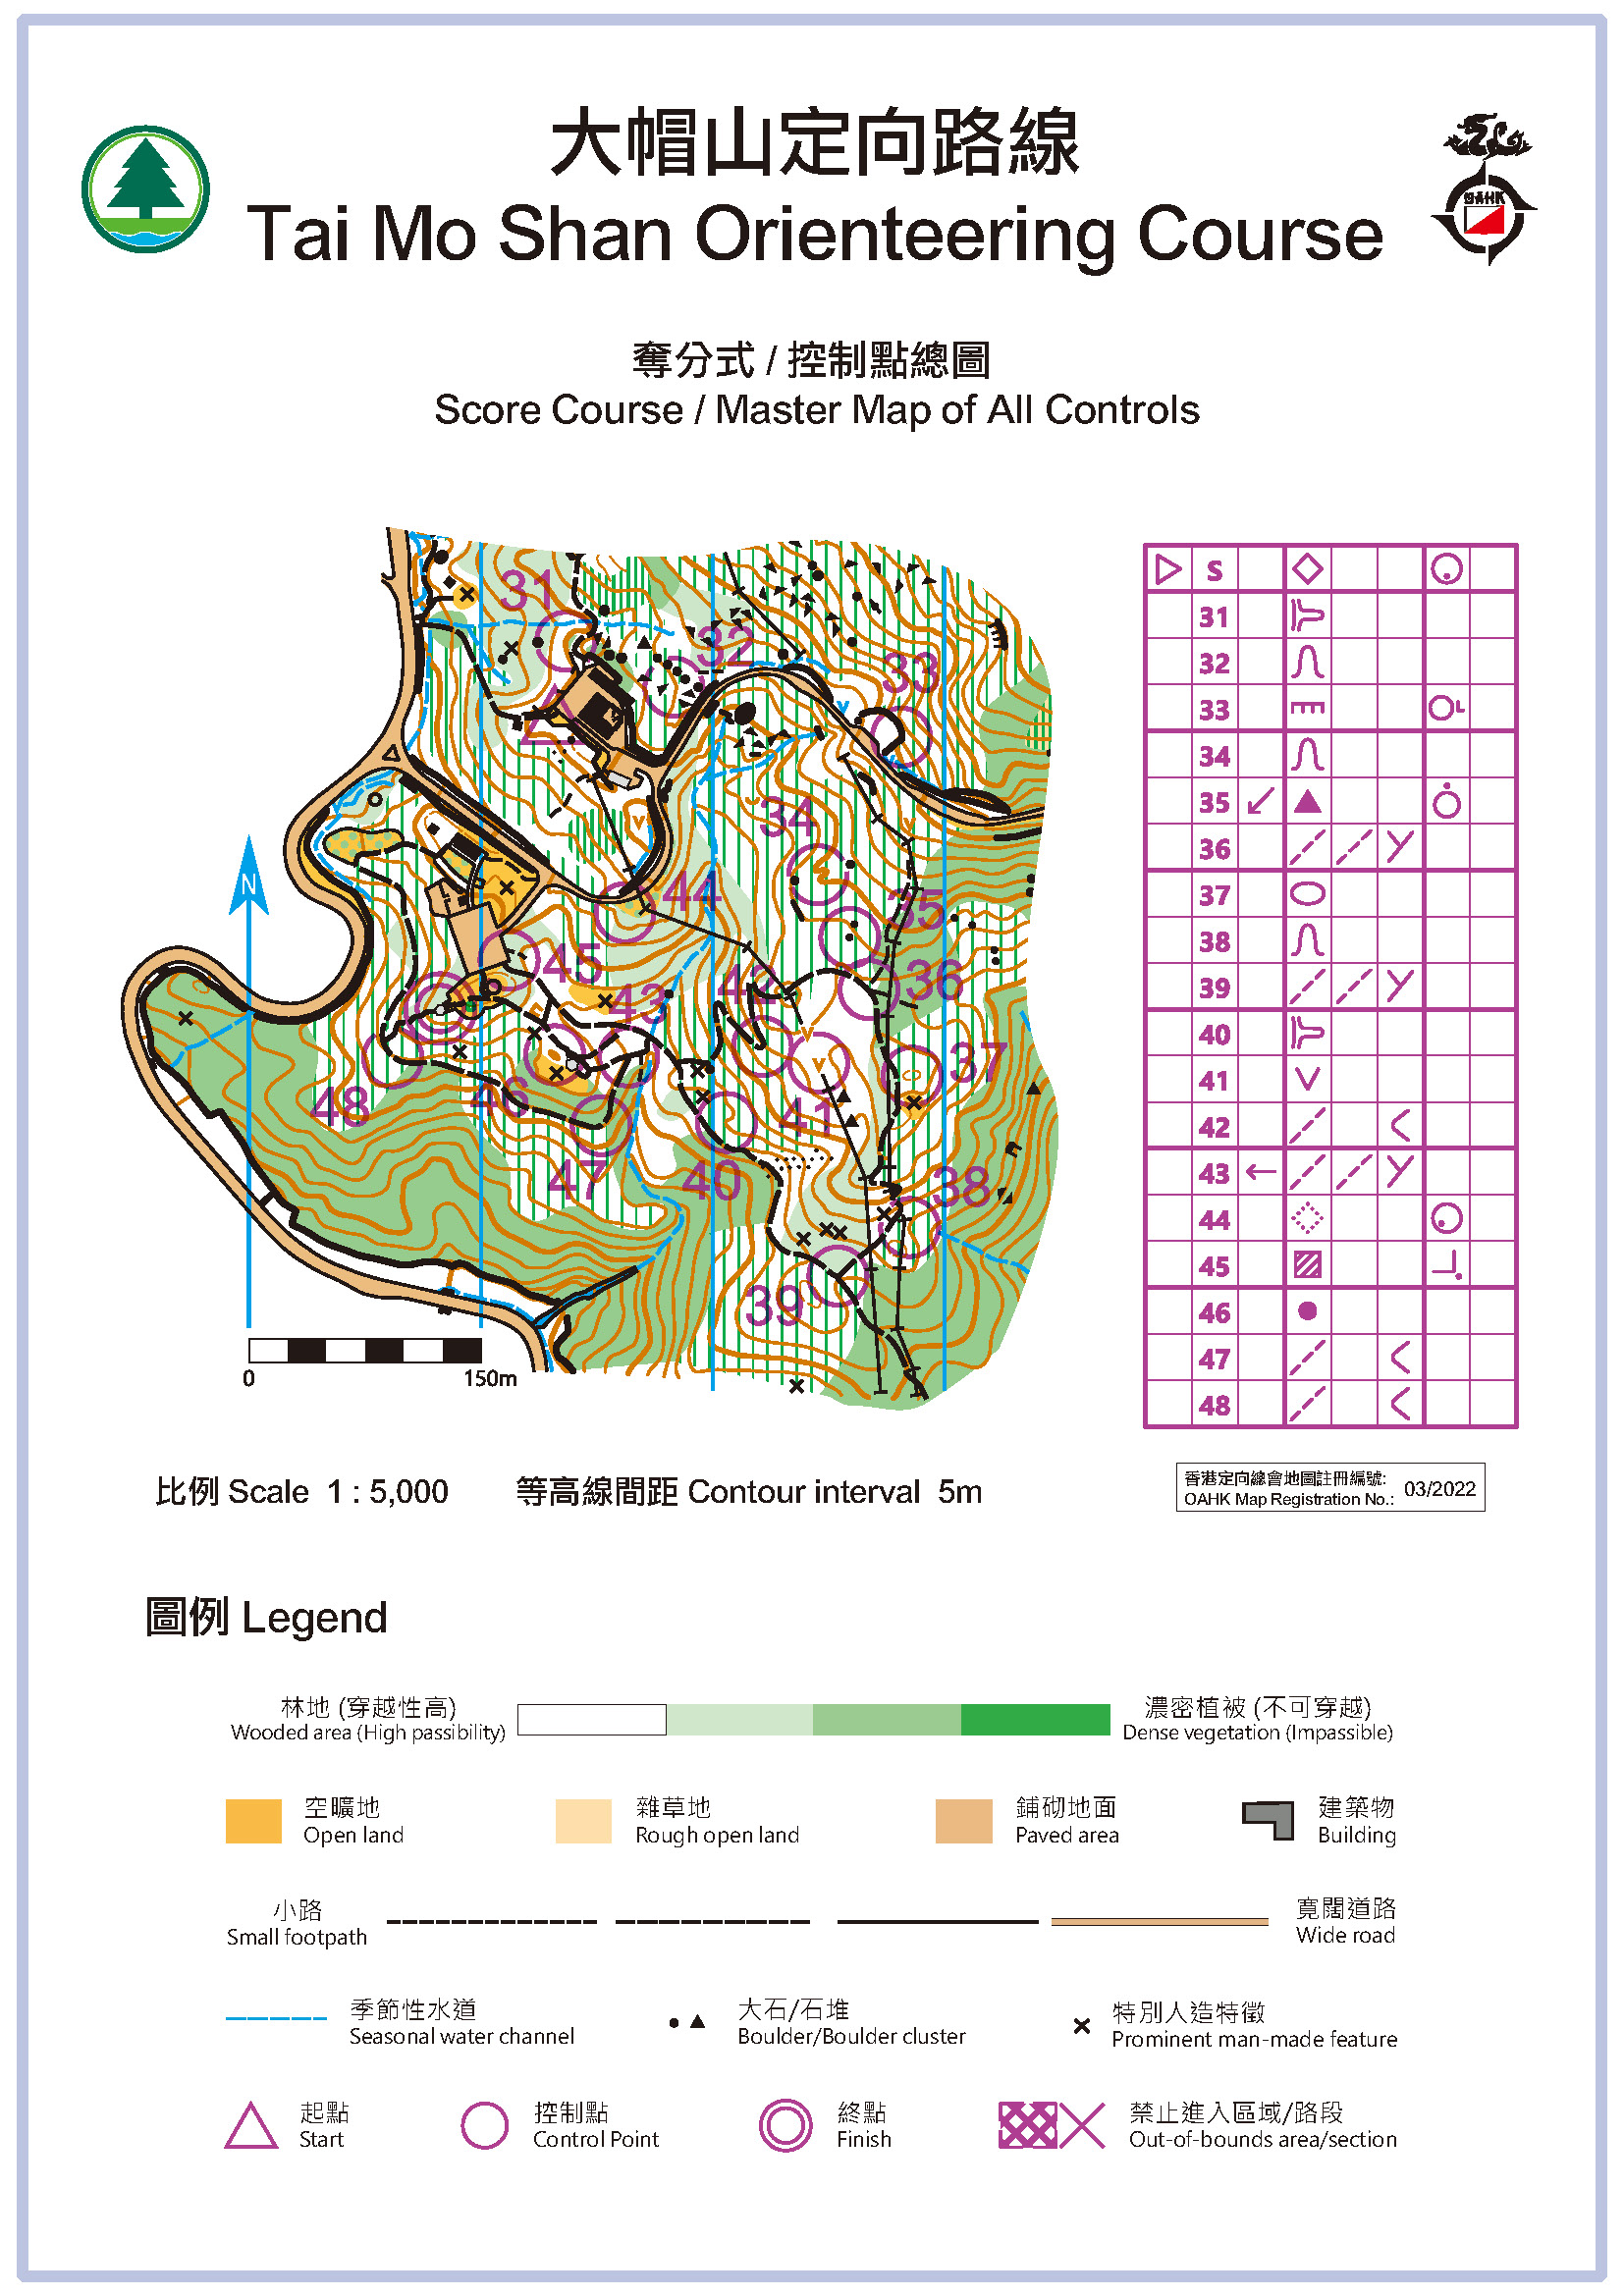 Map Tai Mo Shan Orienteering Course - All